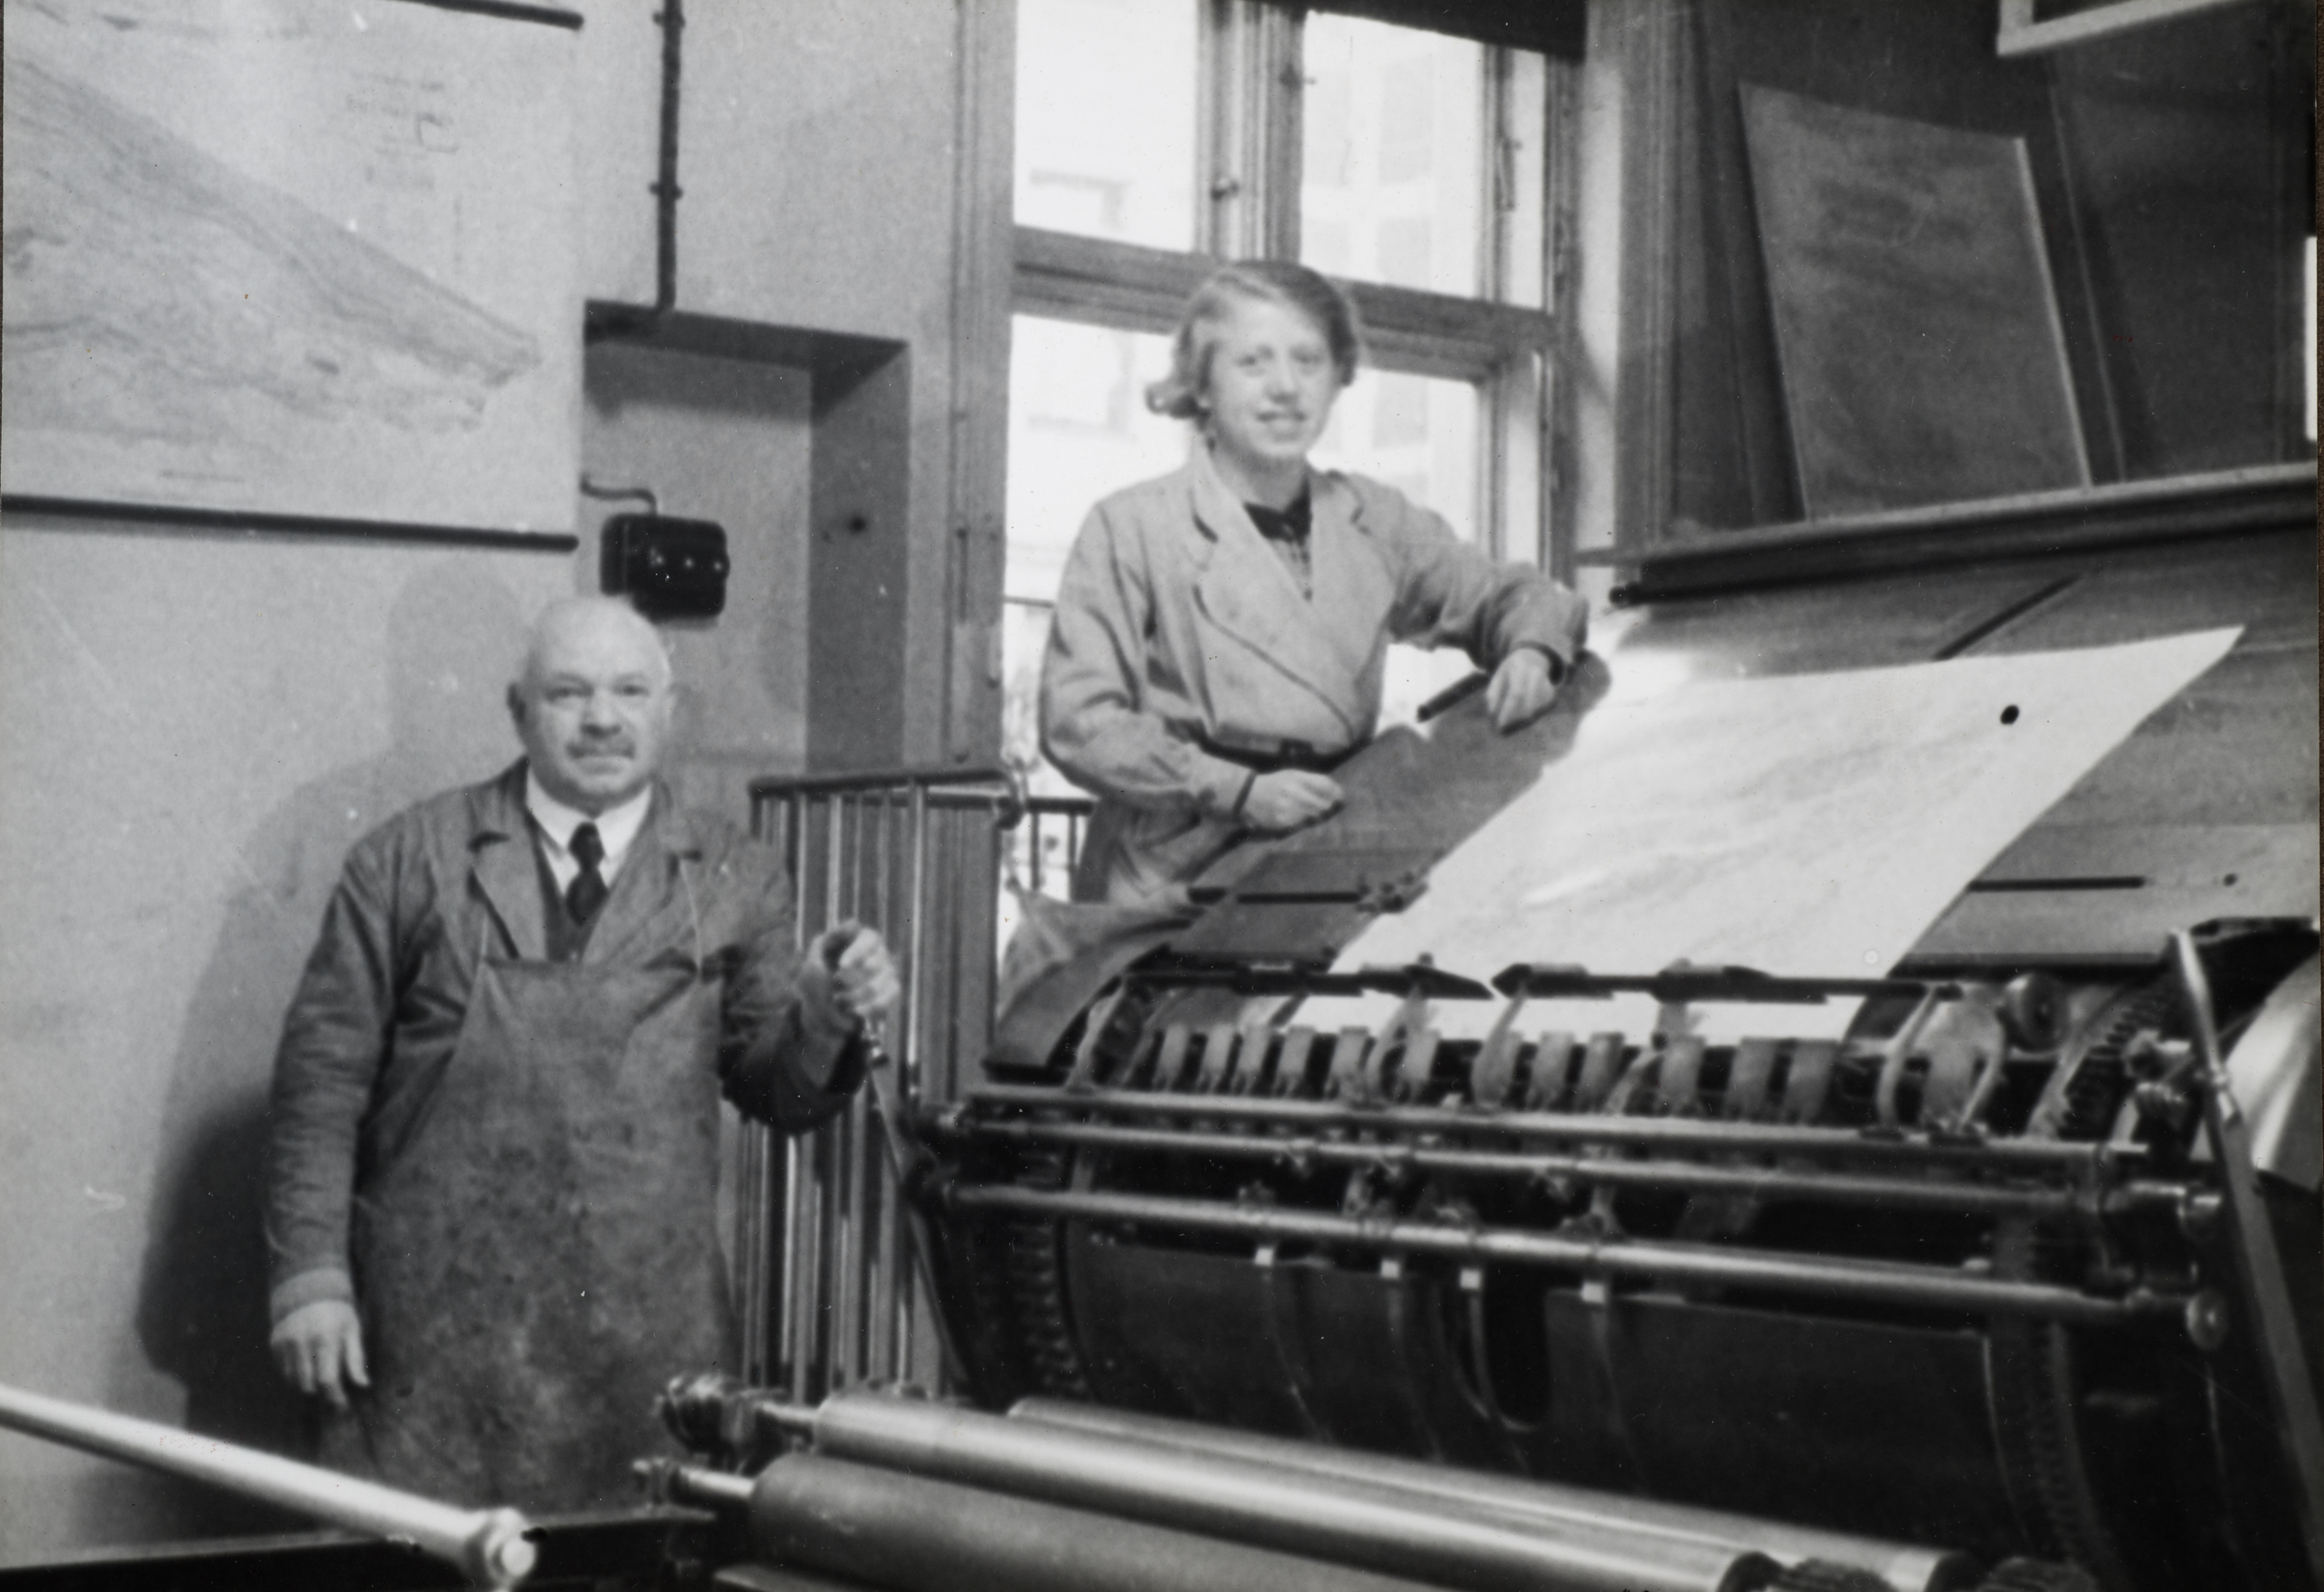 Påleggerske frk. Hjørdis Jacobsen og trykker O. Berger ved hurtigpressa Johannisberg i Trykkerisalen i Norges geografiske oppmåling St. Olavsgt 32 i 1930.